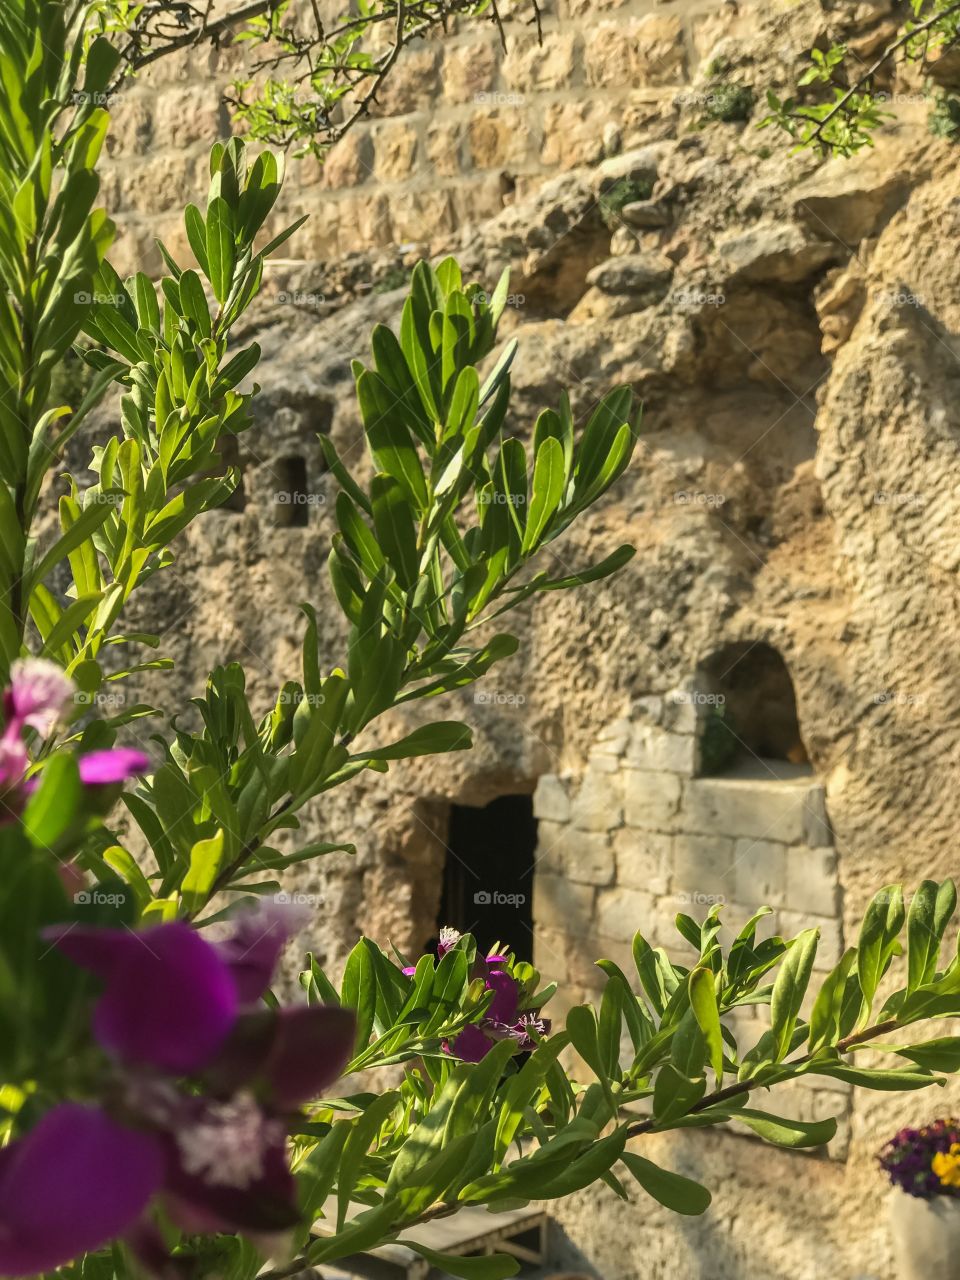 The Garden - The Empty Tomb in Jerusalem, Israel 